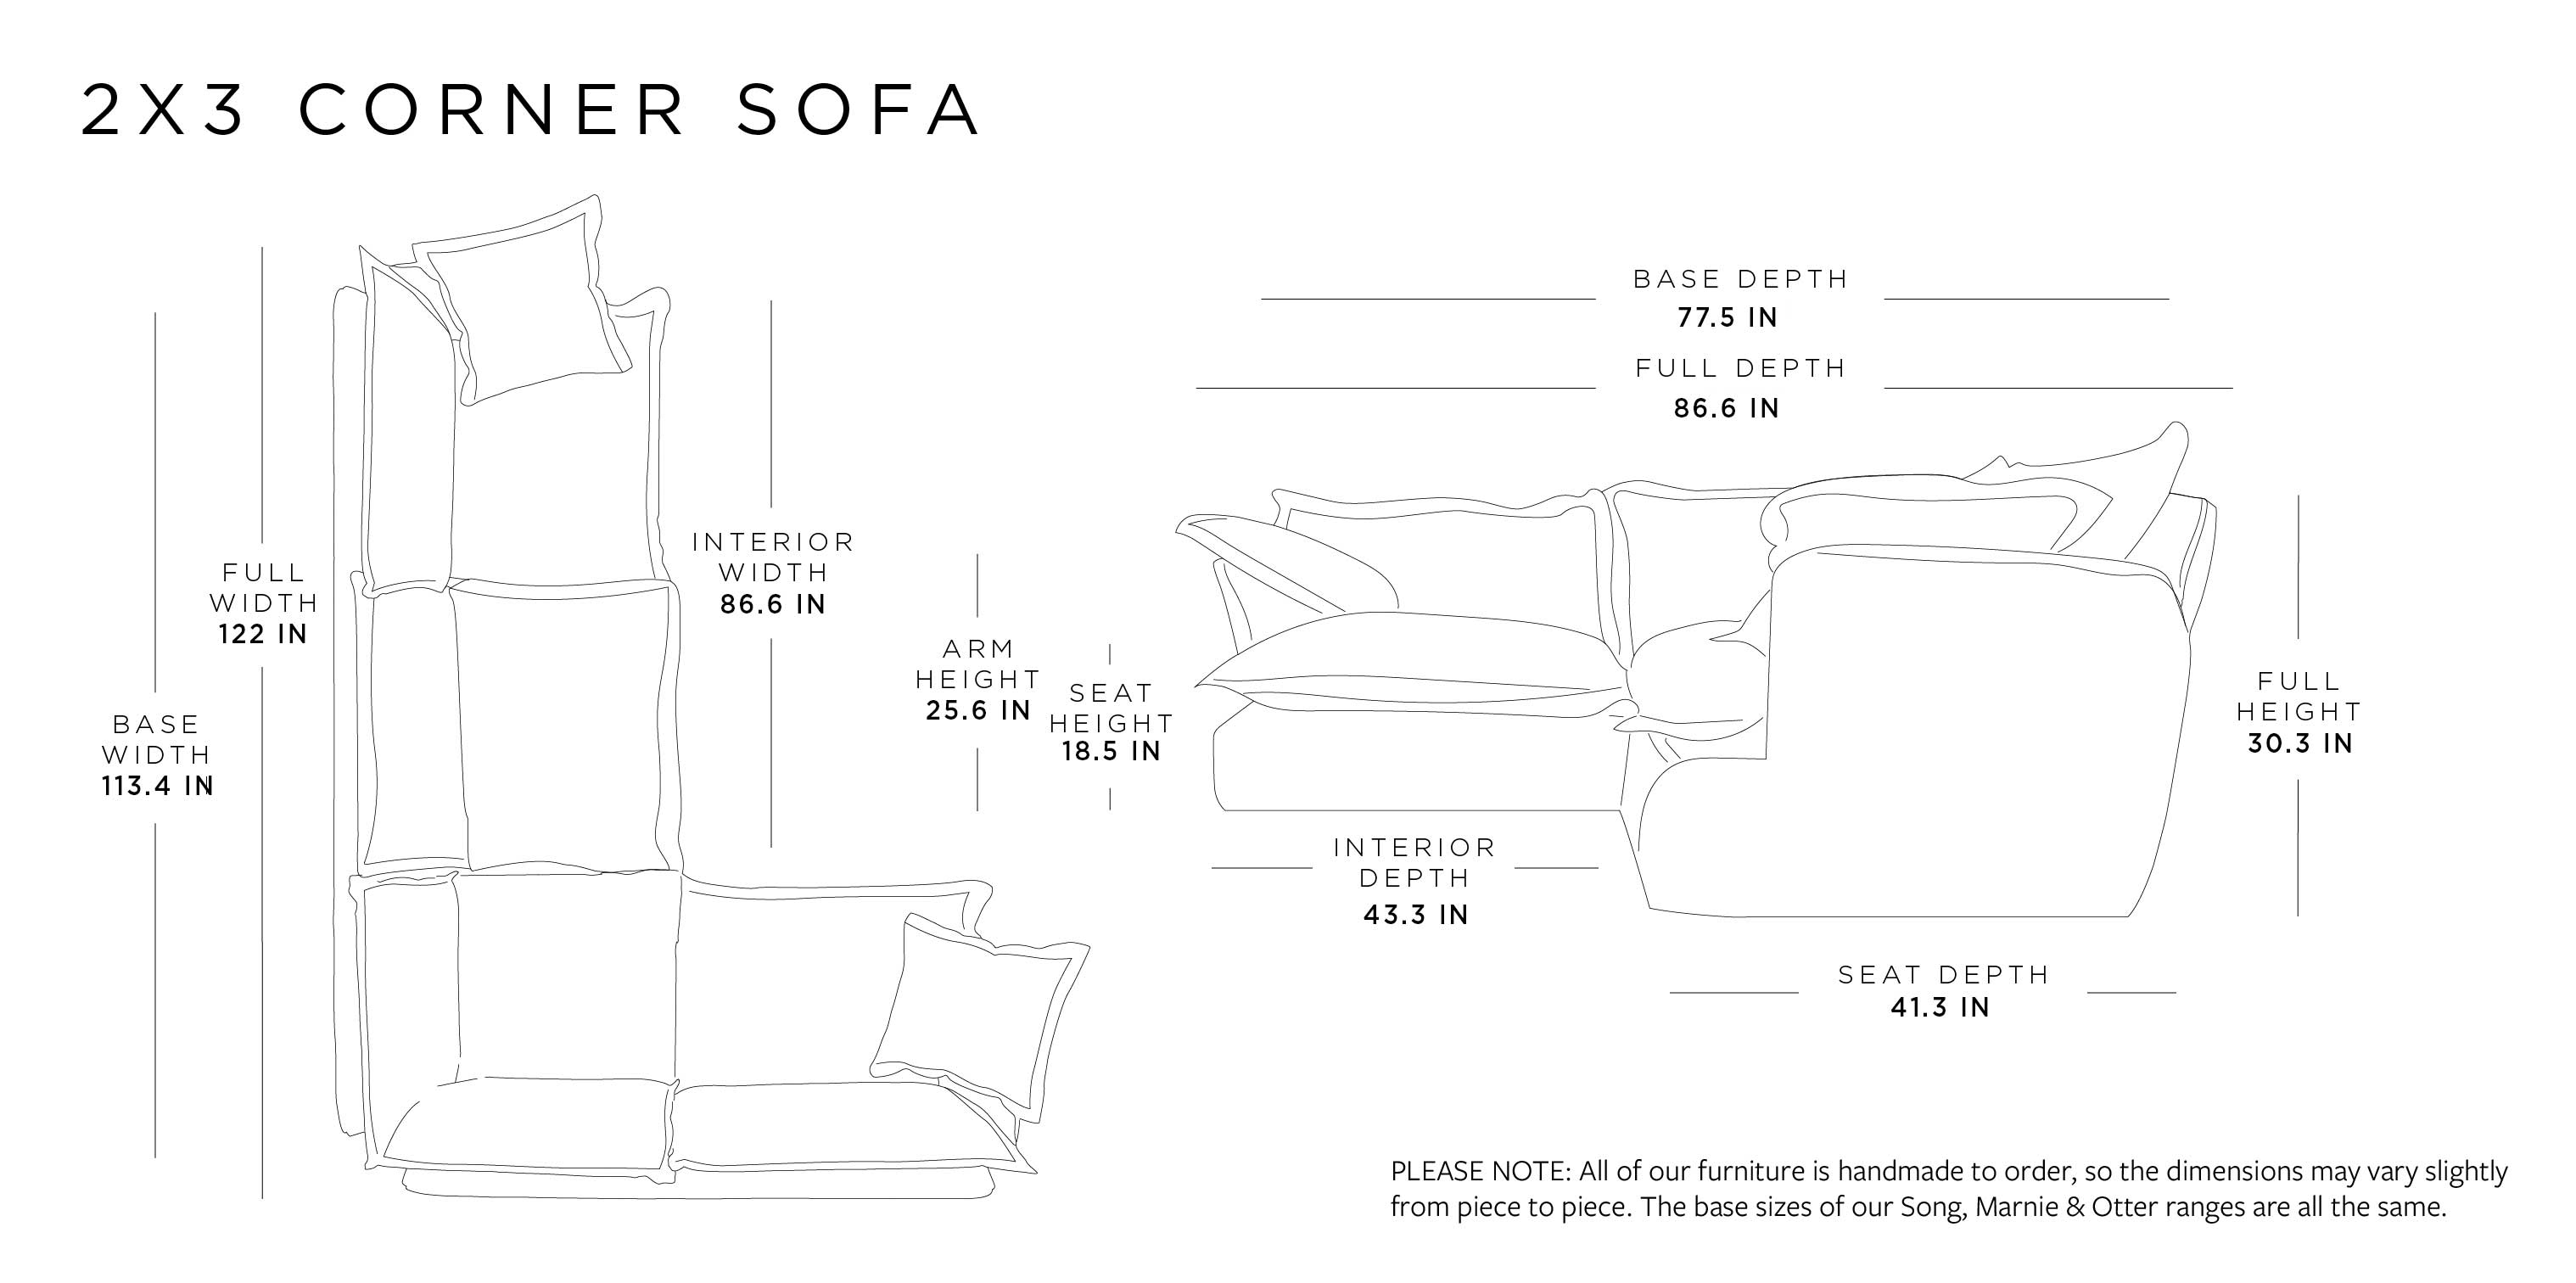 2x3 Corner Sofa | Marnie Range Size Guide